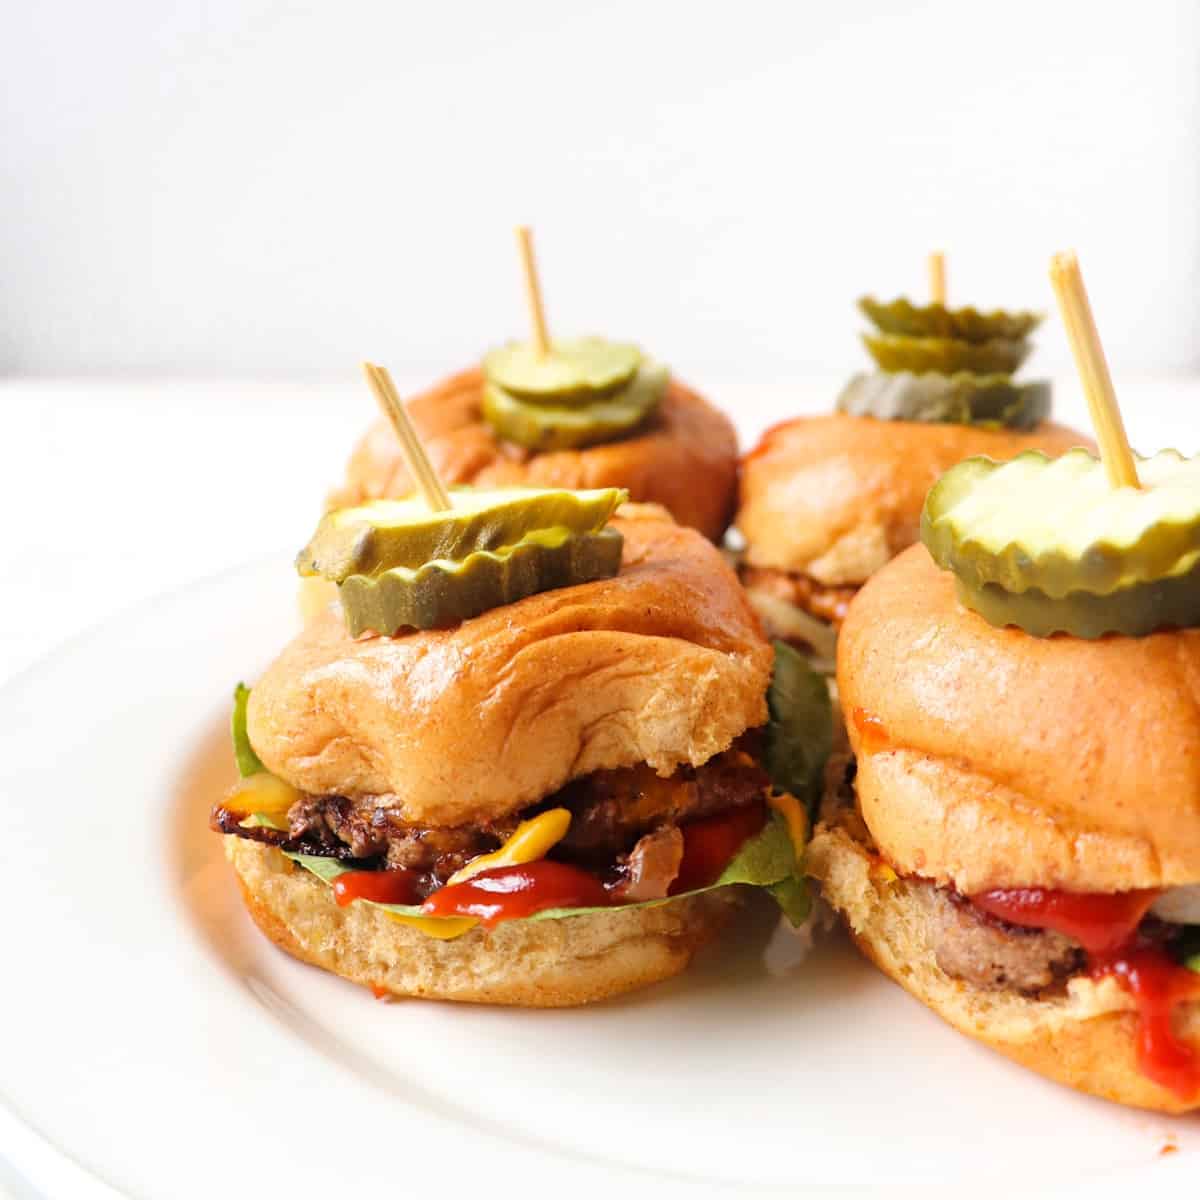 Slider-Style Mini Burgers Recipe